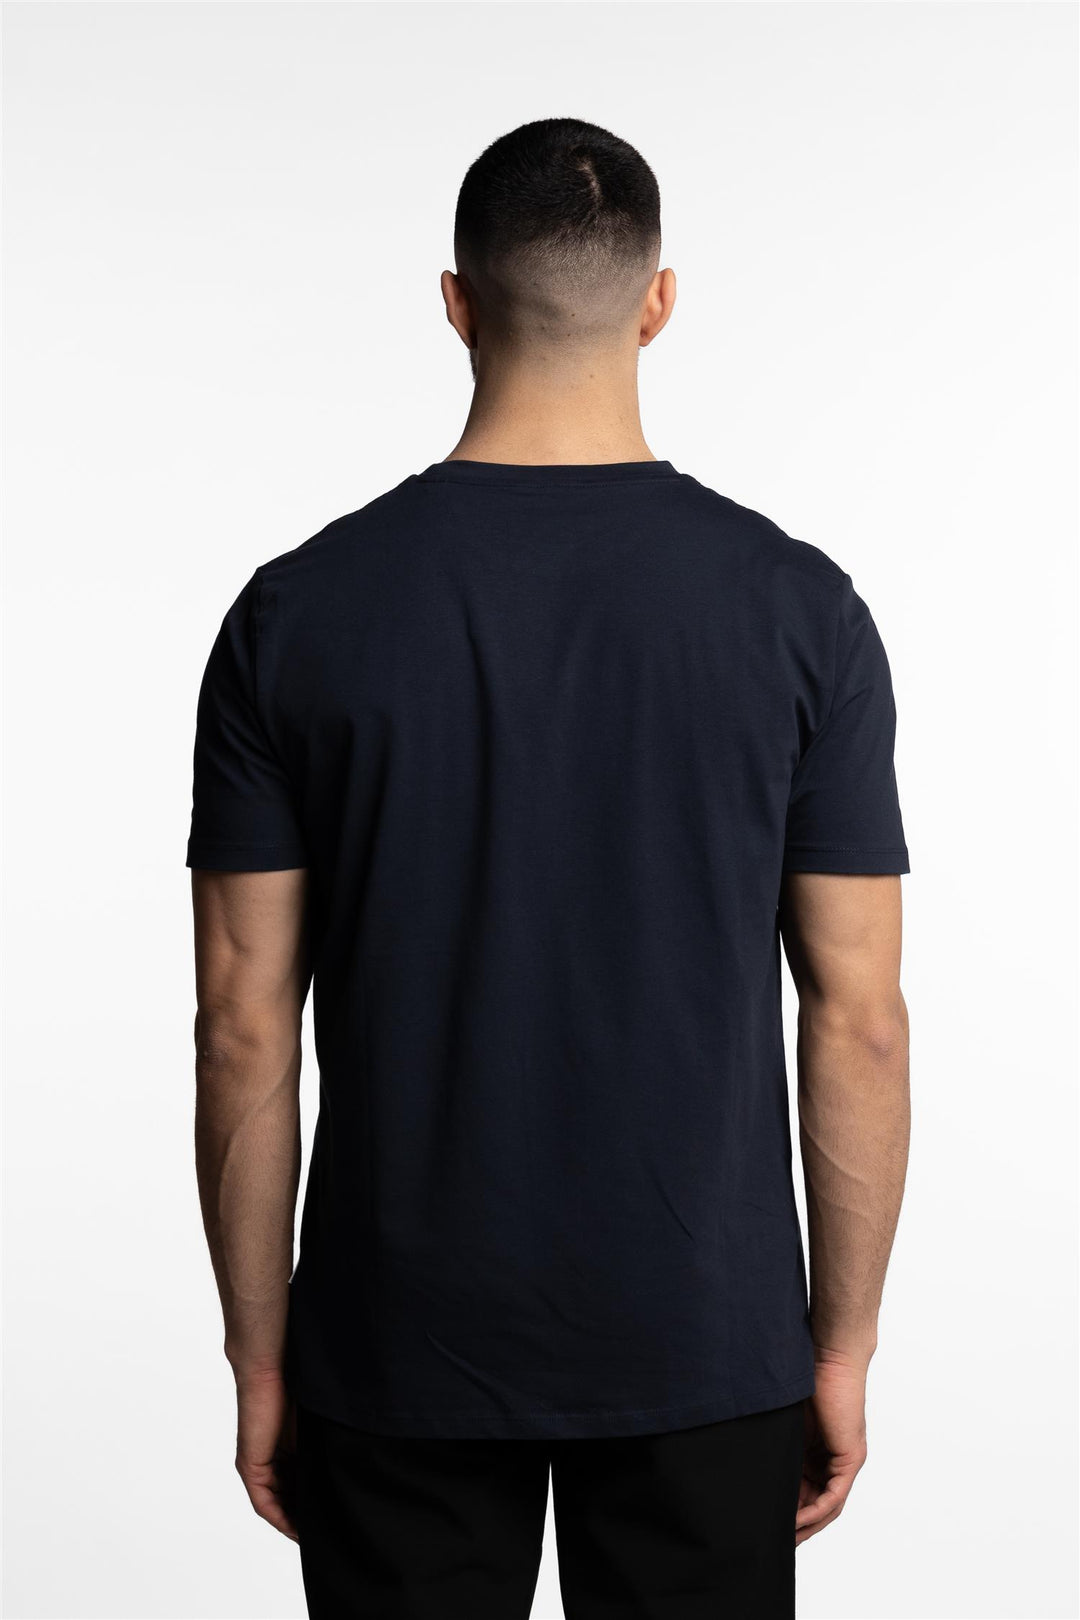 Cotton/Stretch T-Shirt Navy